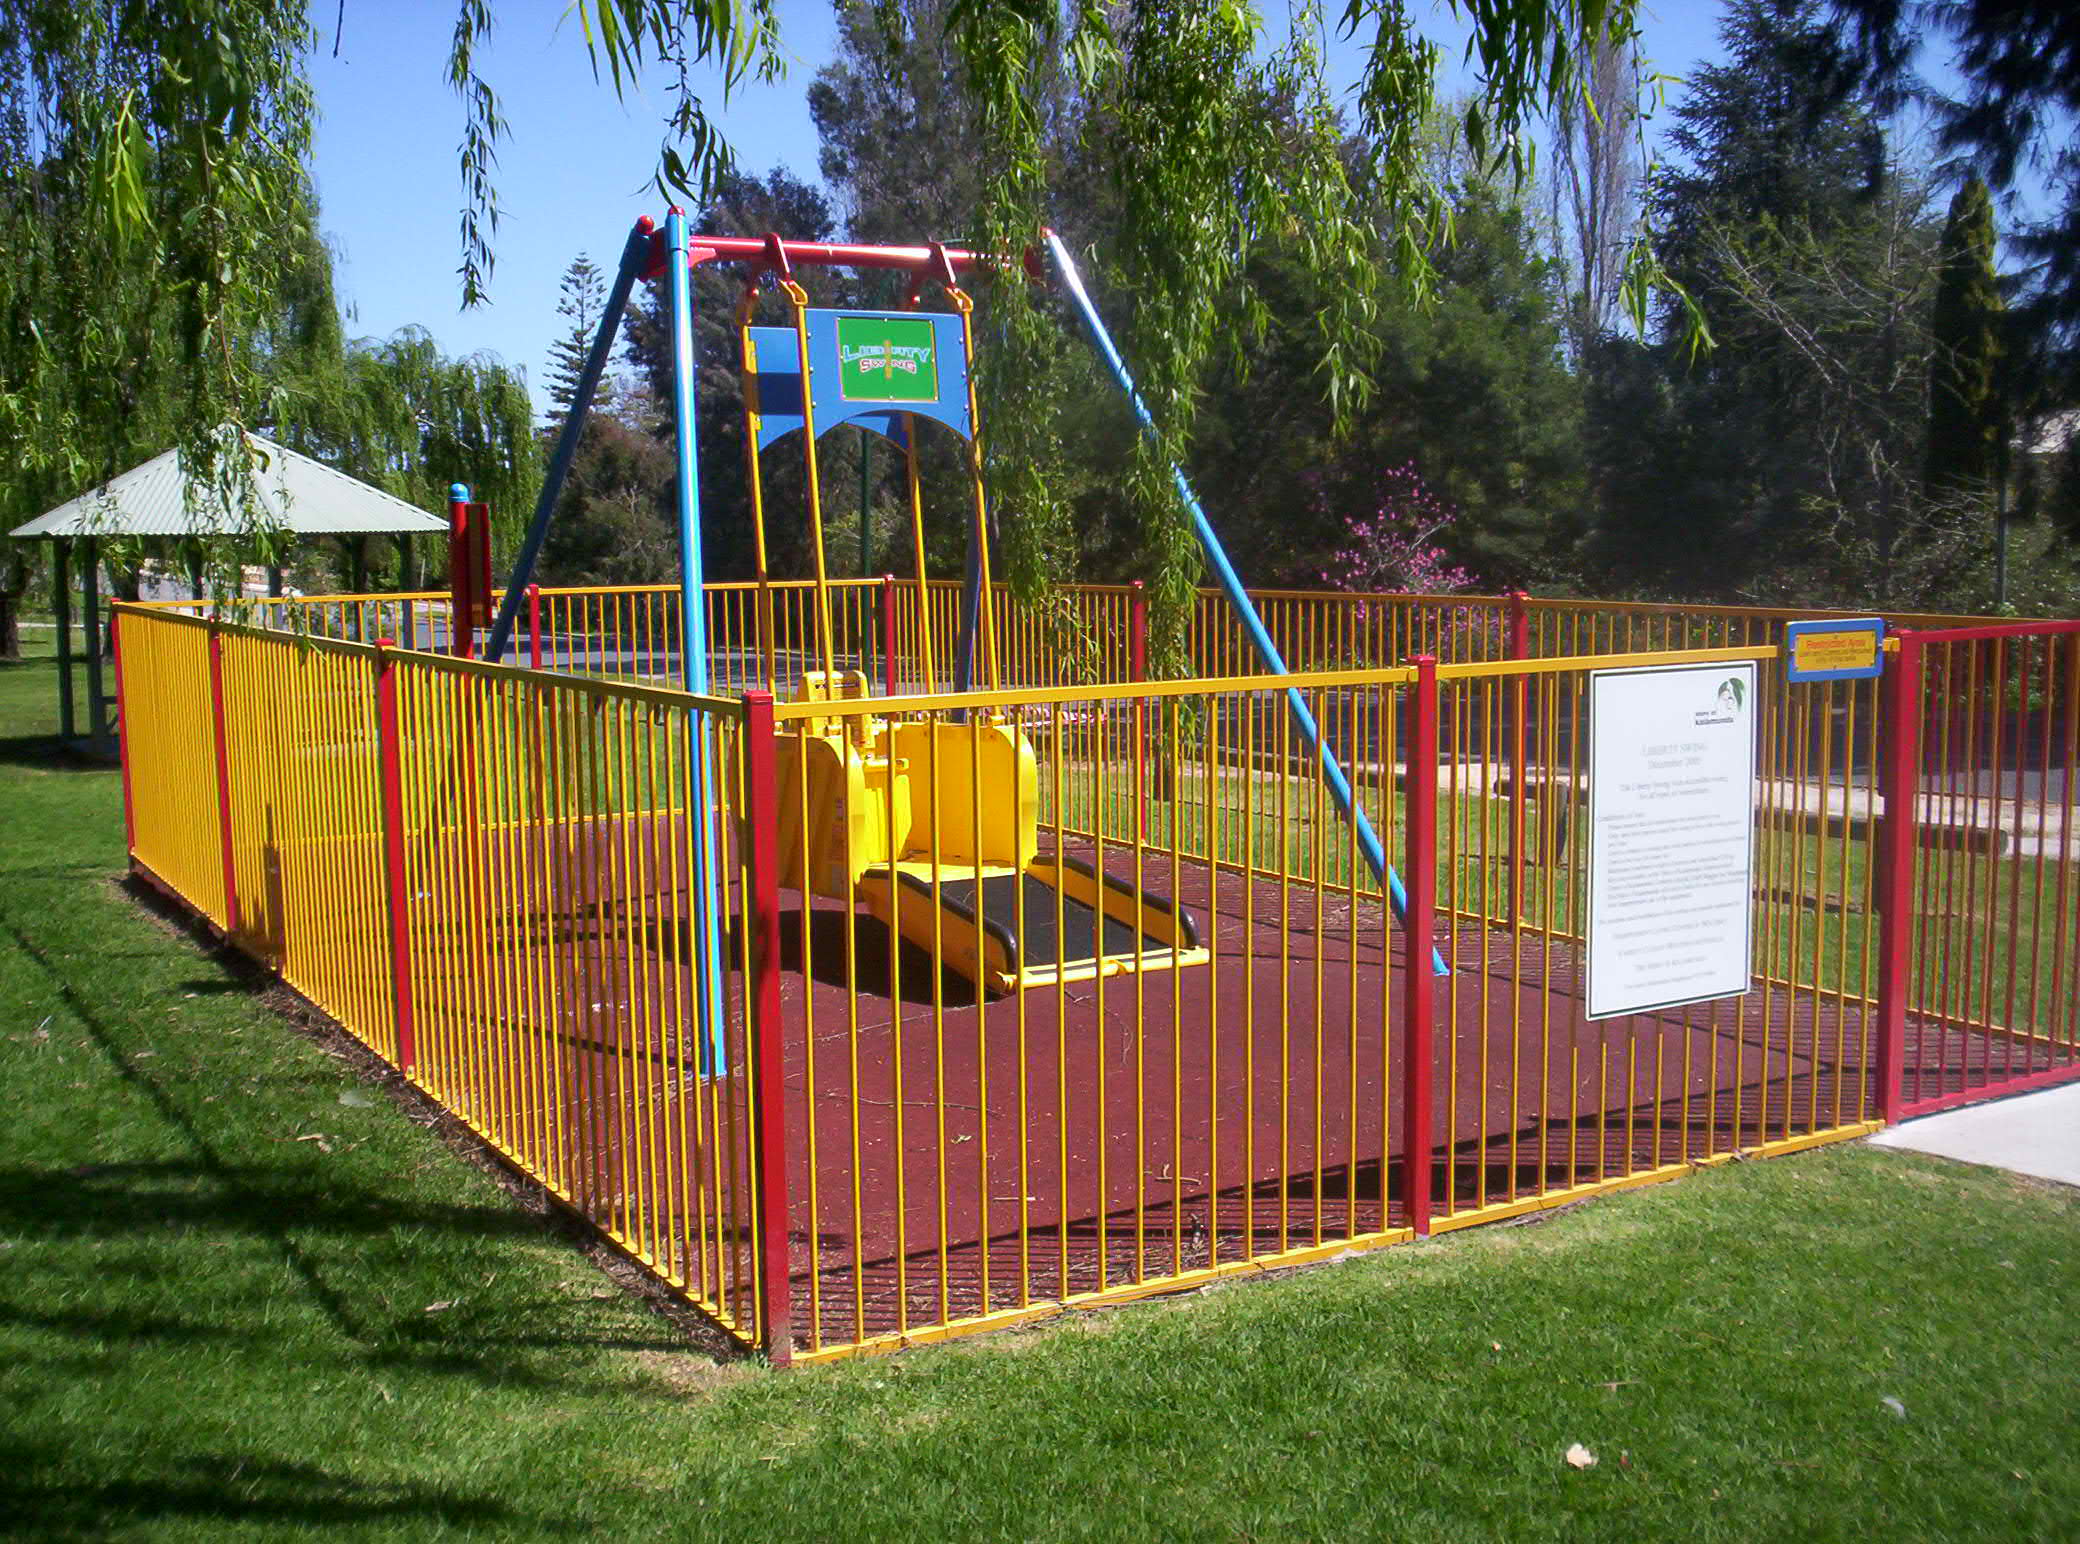 Liberty Swing located in Stirk Park in Kalamunda